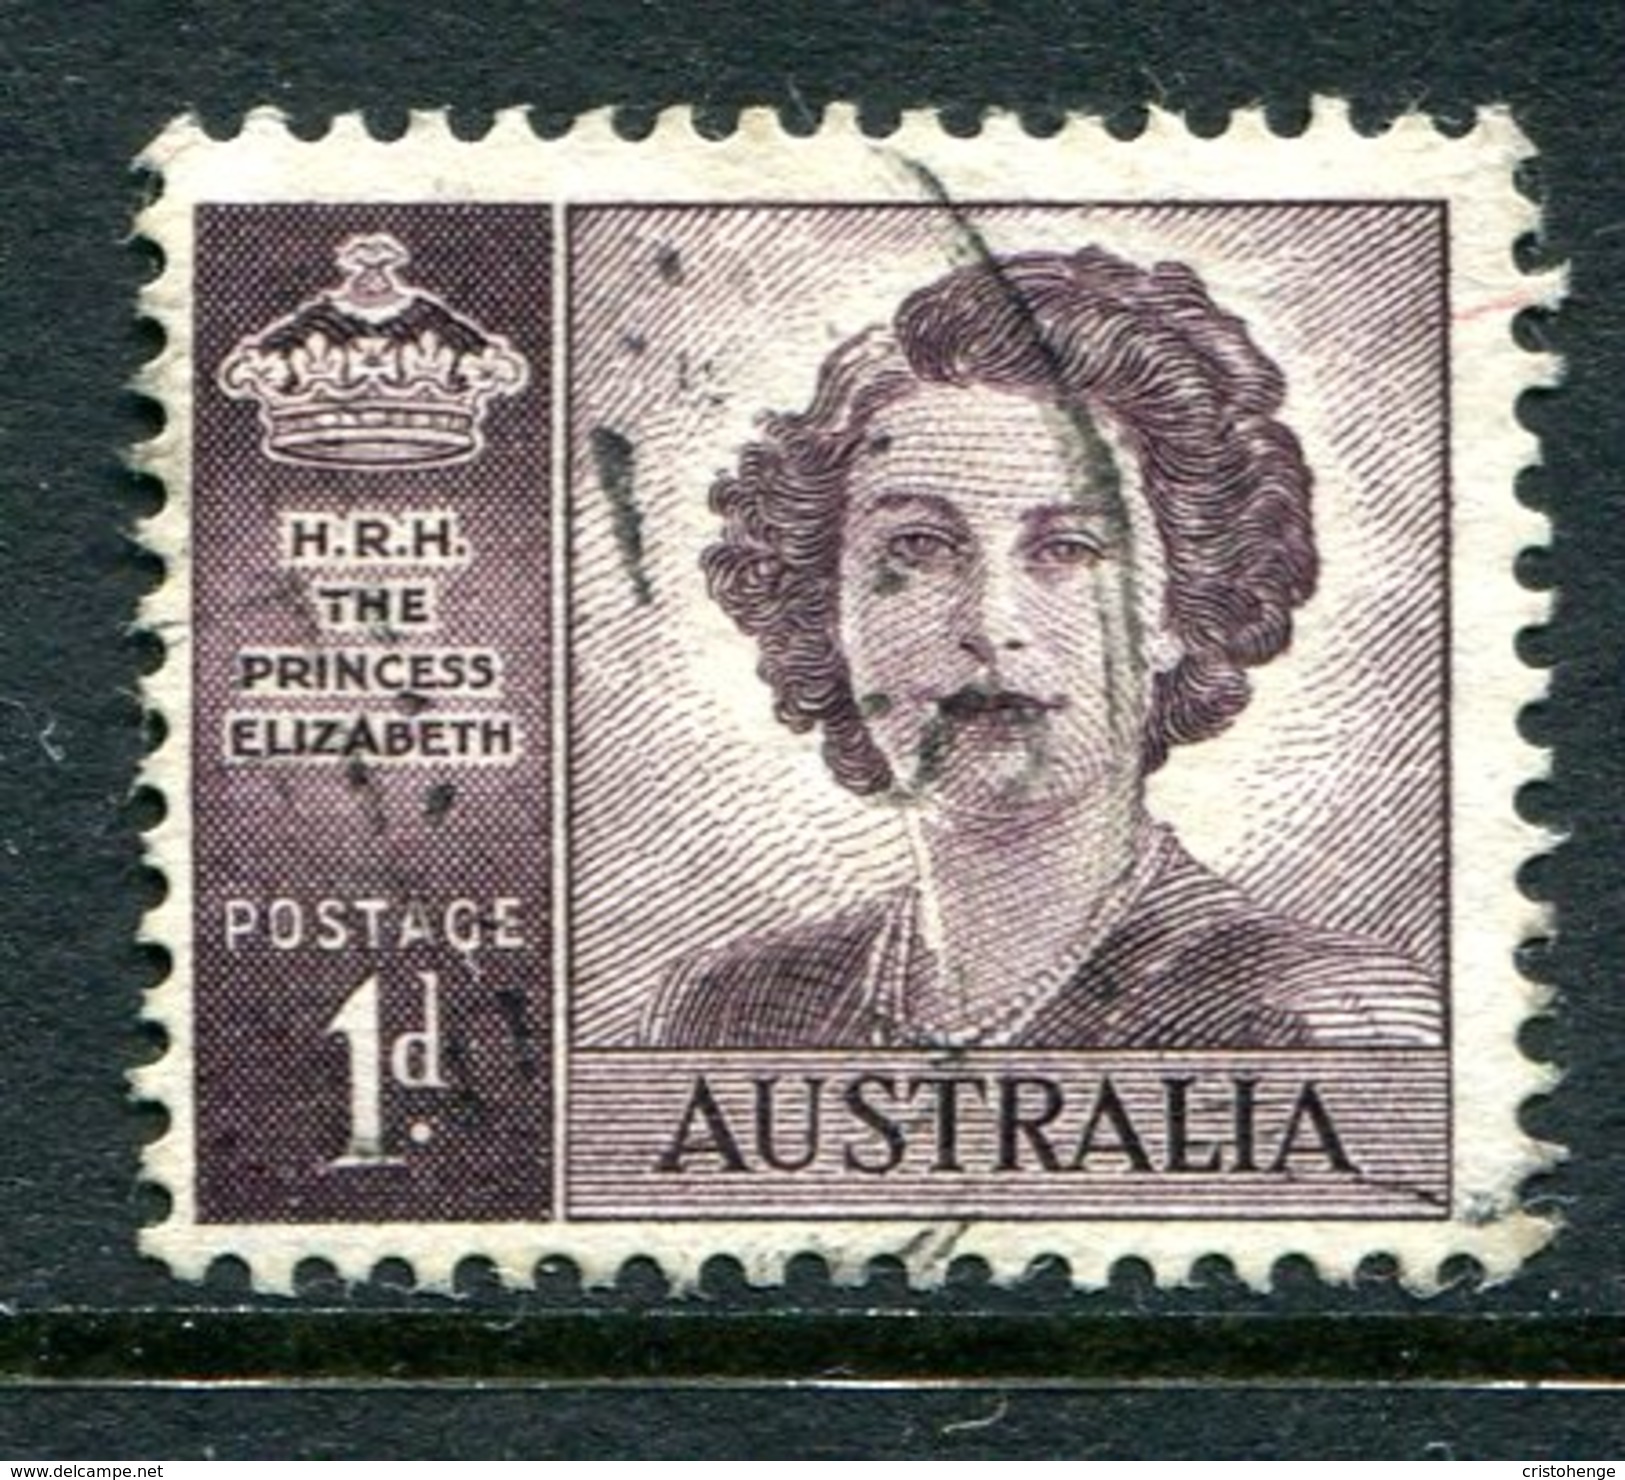 Australia 1947-52 Marriage Of Princess Elizabeth - No Wmk. Used (SG 222a) - Ungebraucht